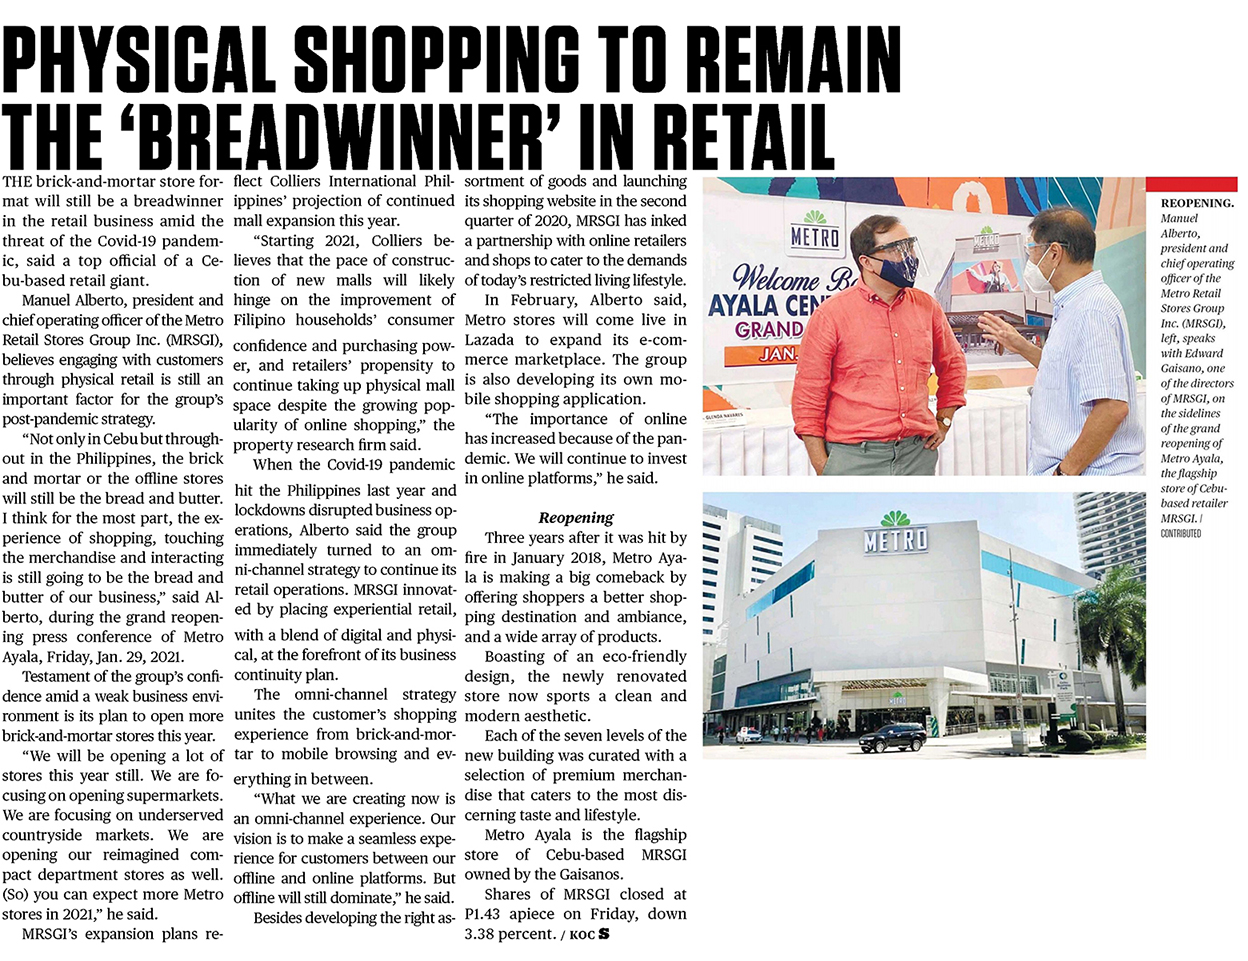 February 1 2021 Physical shopping to remain the breadwinner in retail Sun Star Cebu